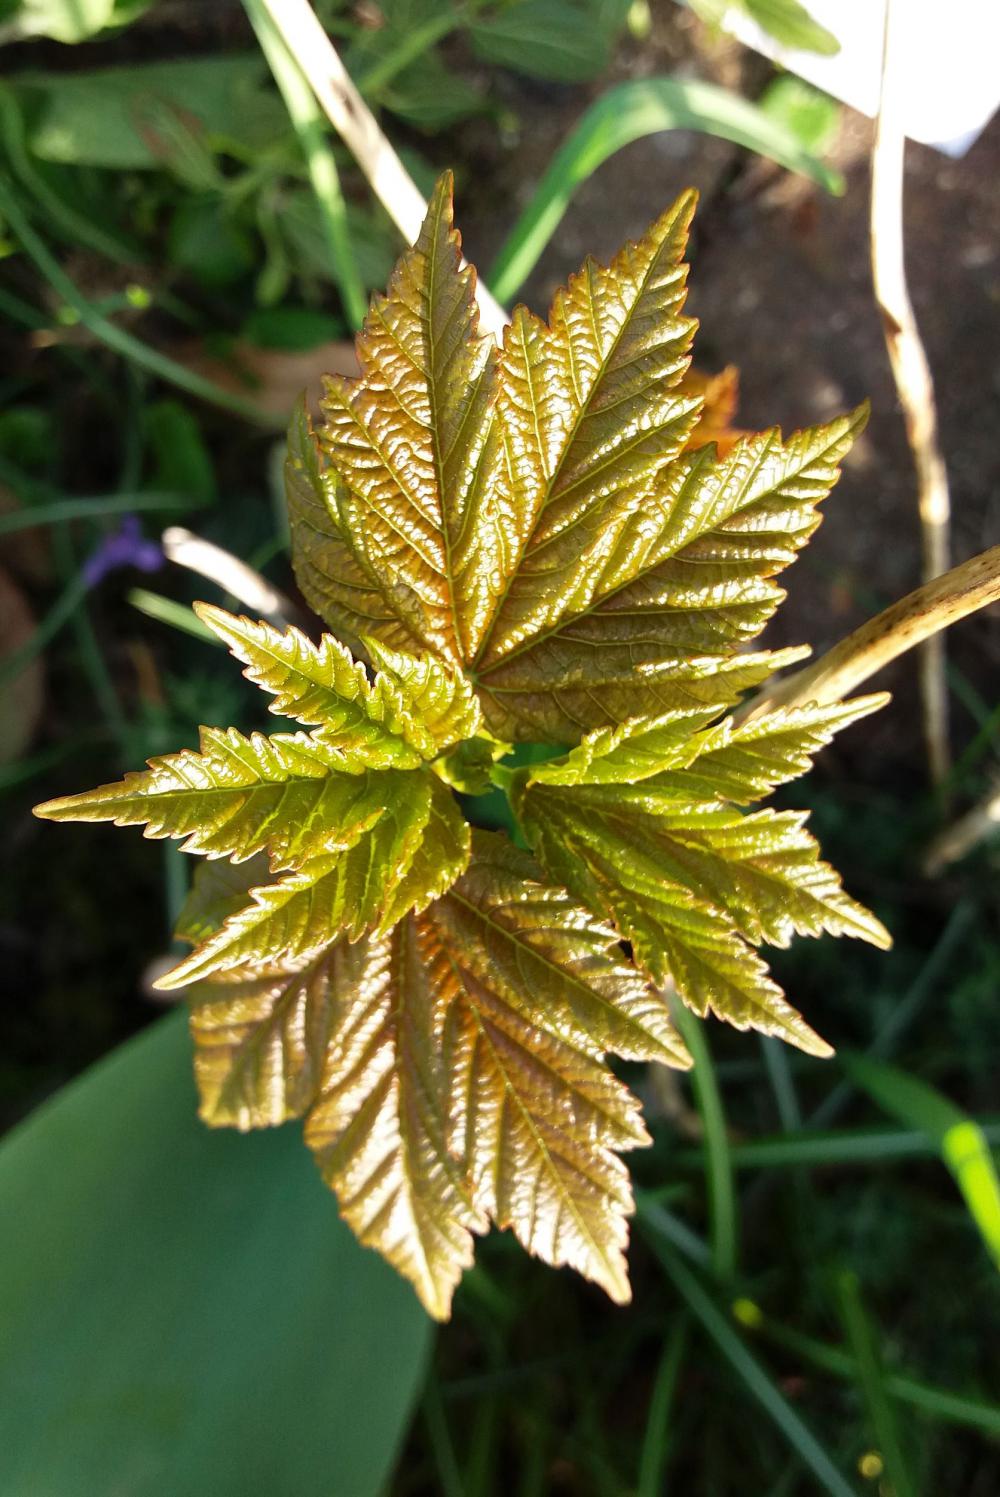 A week of weeds - Acer pseudoplatanus